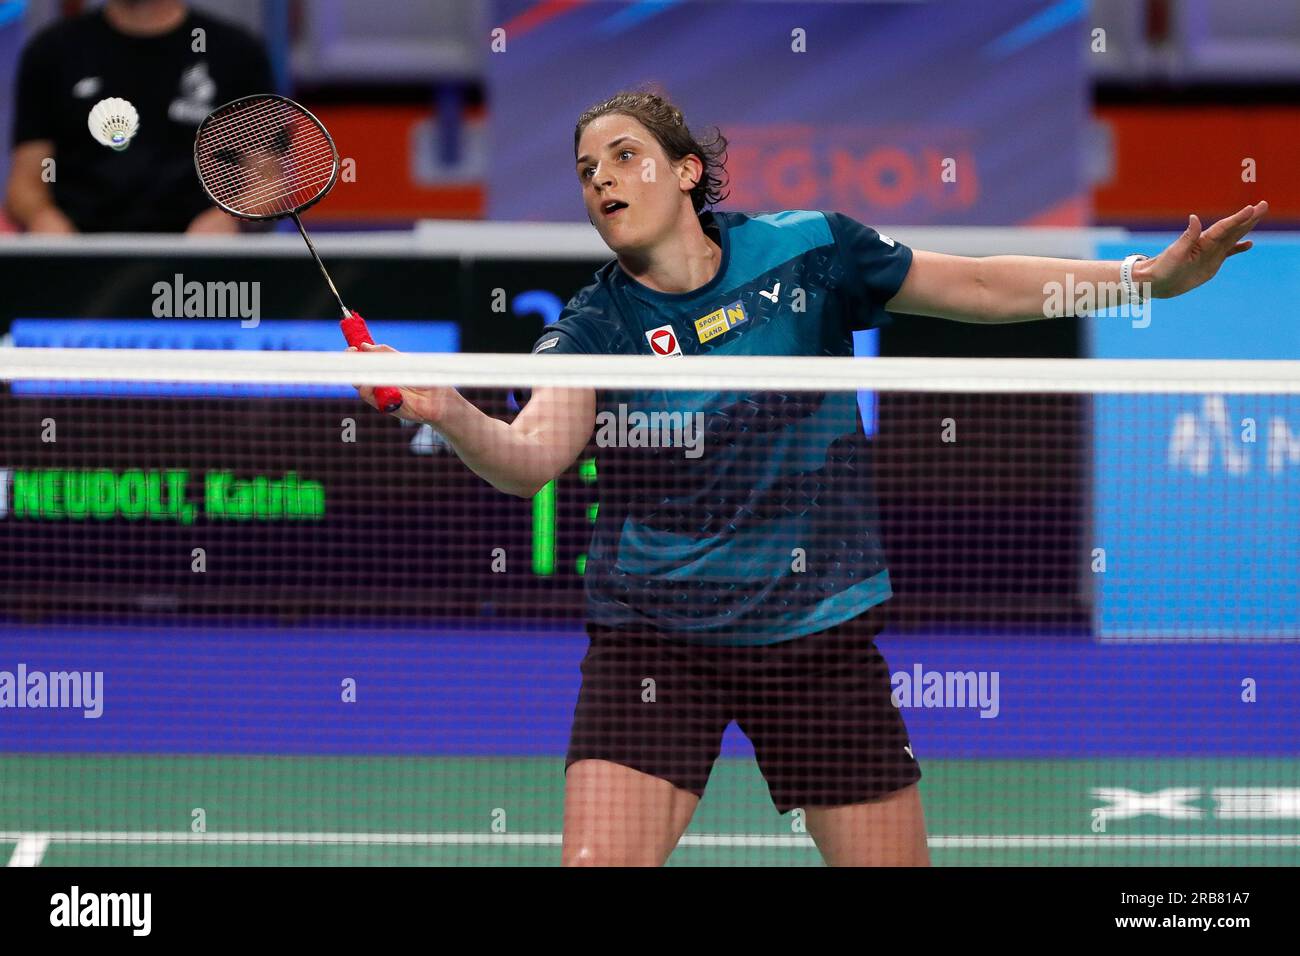 Tarnow, Slovenia. 26 giugno 2023: L'austriaca Katrin Neudolt compete nel Badminton - Women's Single Match durante i Giochi europei - Day 7 alla Jaskolka Arena di Tarnow, Polonia. 26 giugno 2023. (Foto di Nikola Krstic/Alamy) Foto Stock